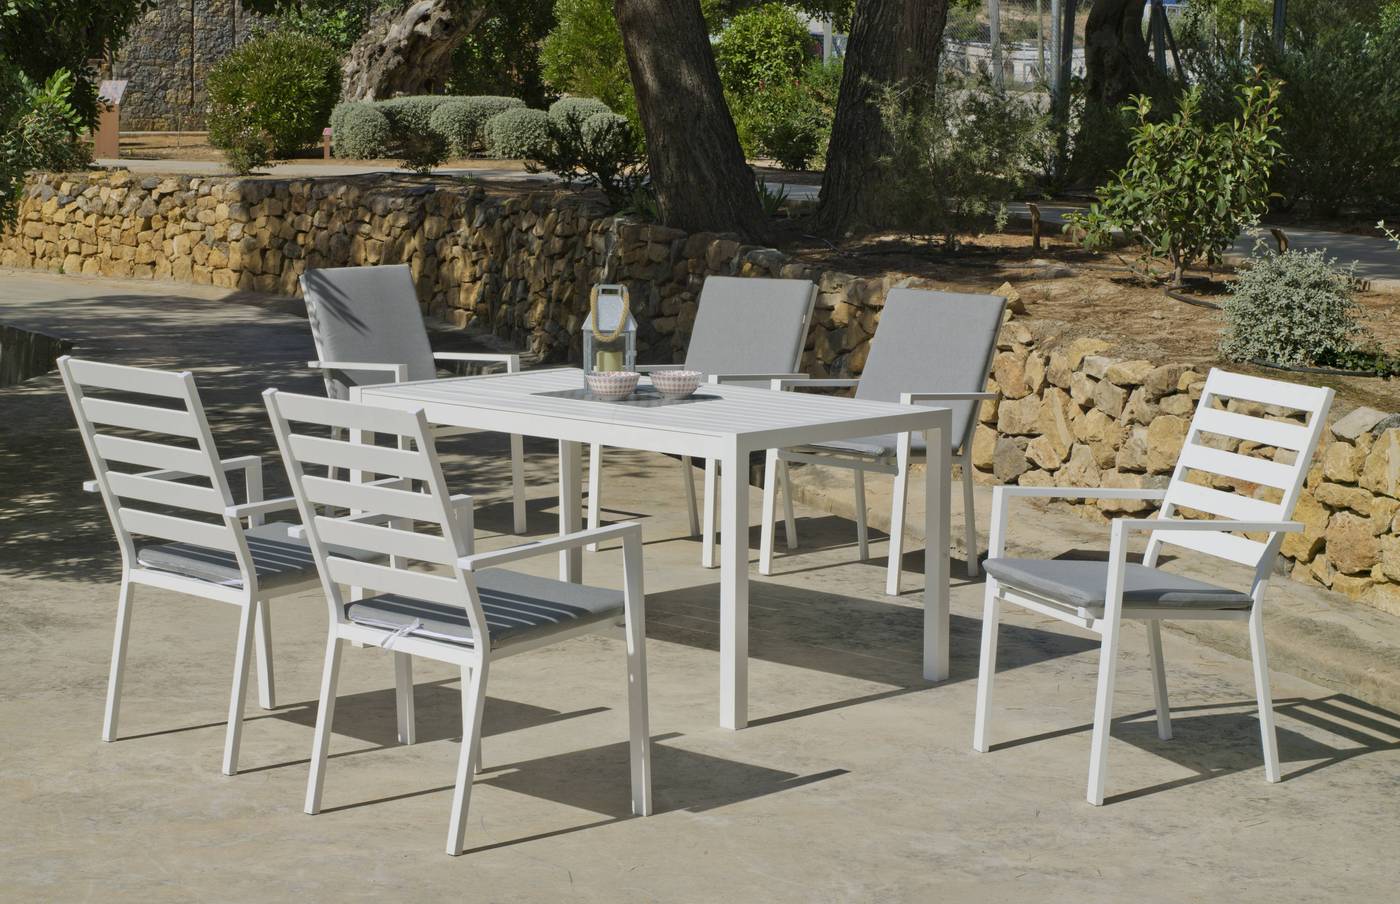 Mesa rectangular de aluminio  con tablero lamas de aluminio + 6 sillones. Disponible en color blanco, antracita, champagne, plata o marrón.